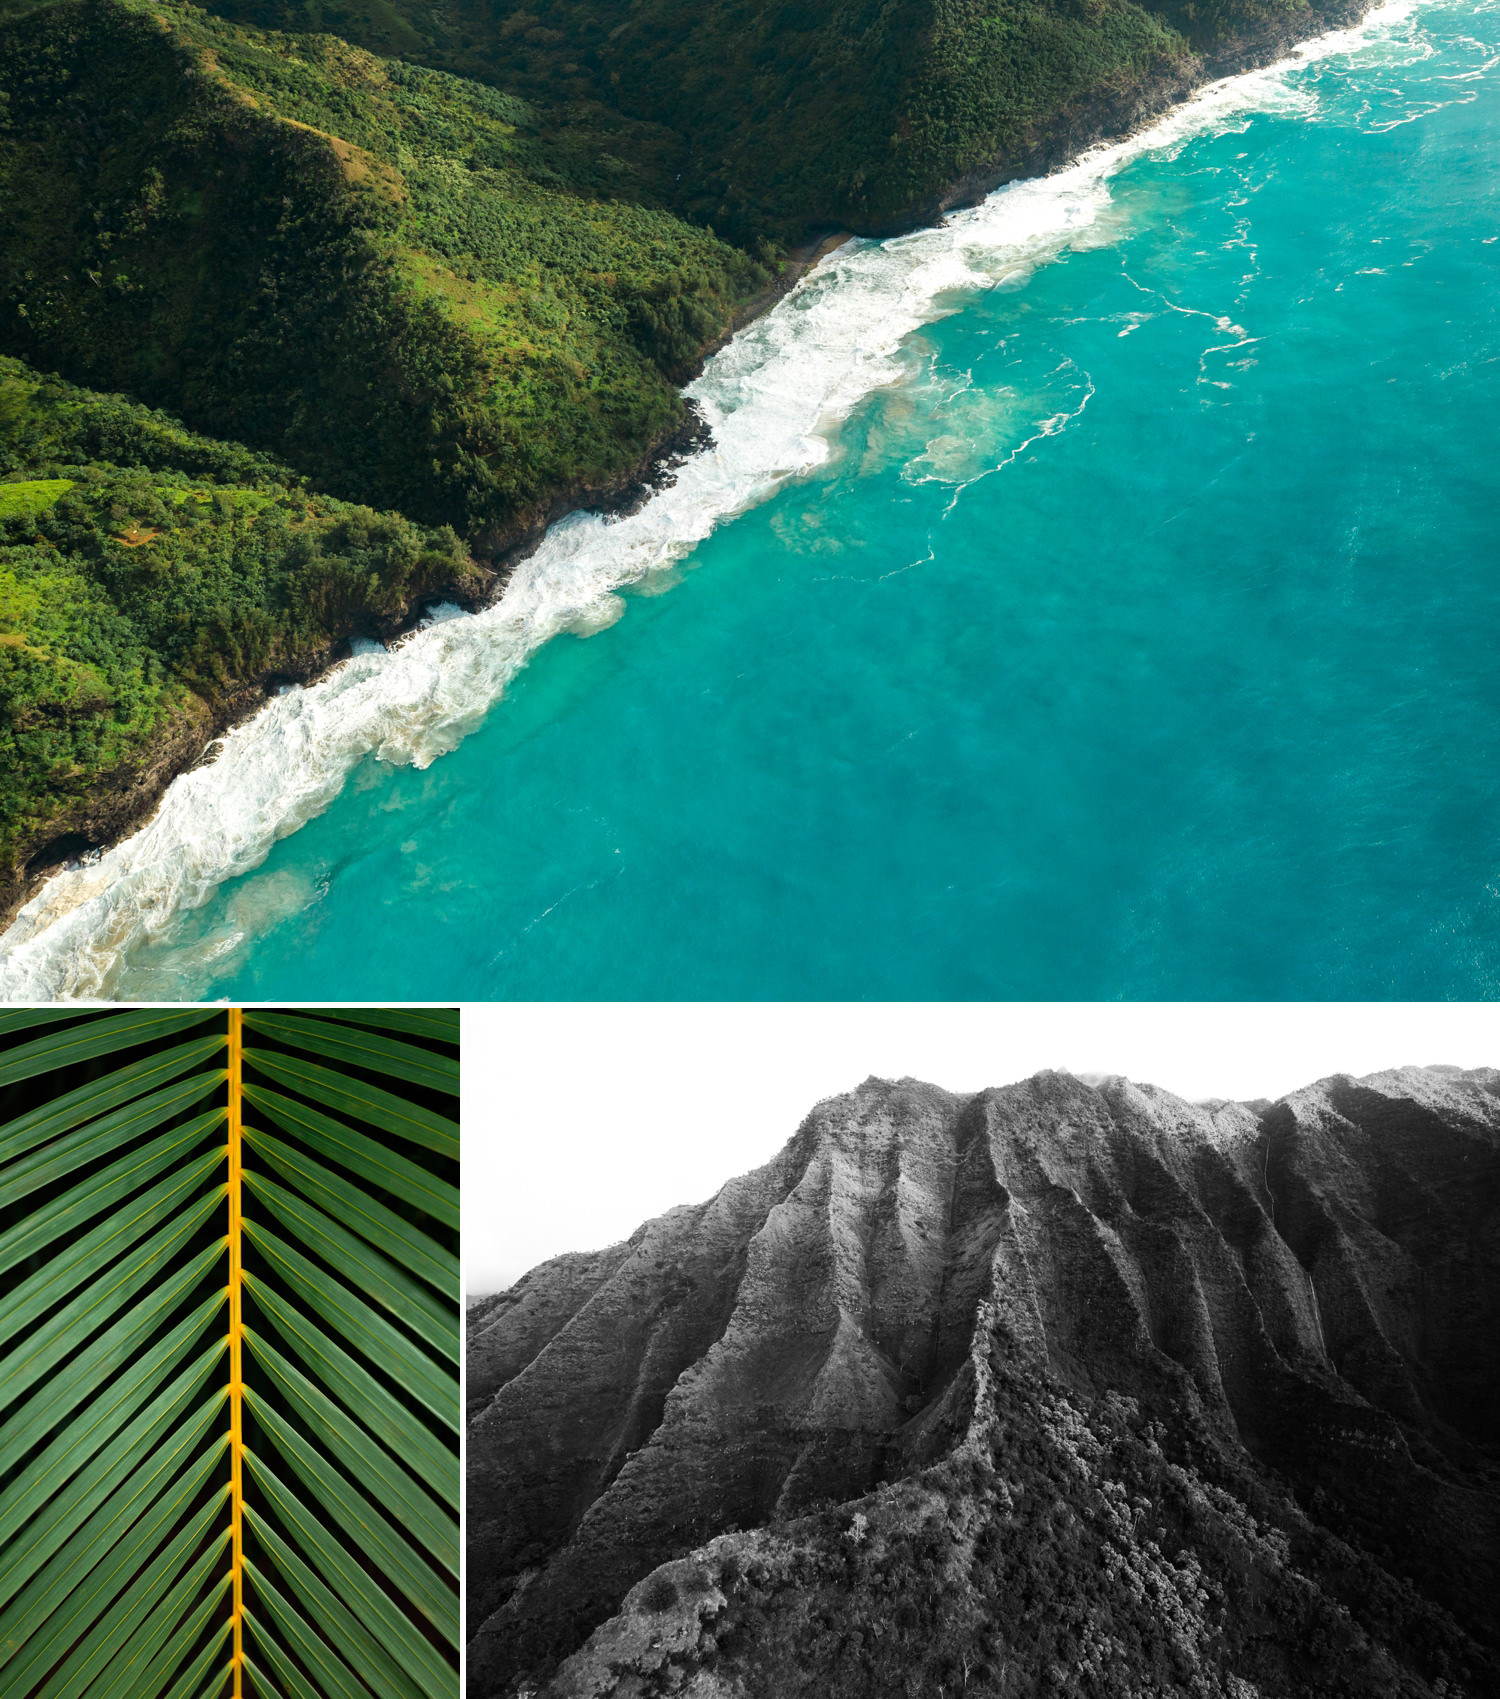 cameron-zegers-photography-travel-hawaii-kauai-9.jpg